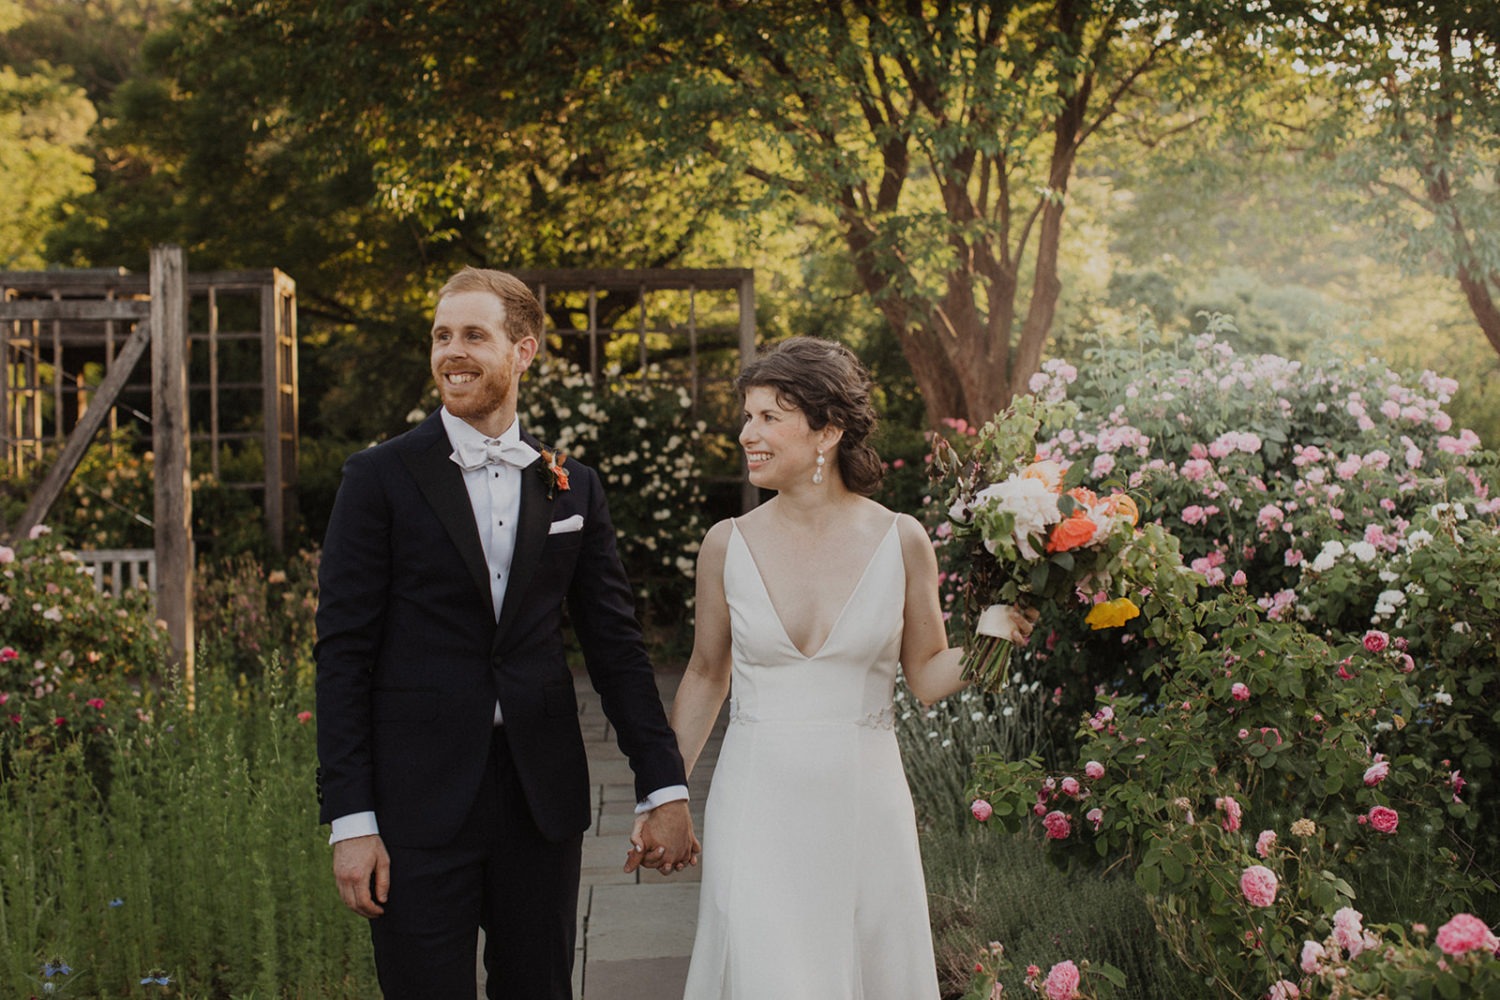 couple walks through garden of flowers at garden wedding